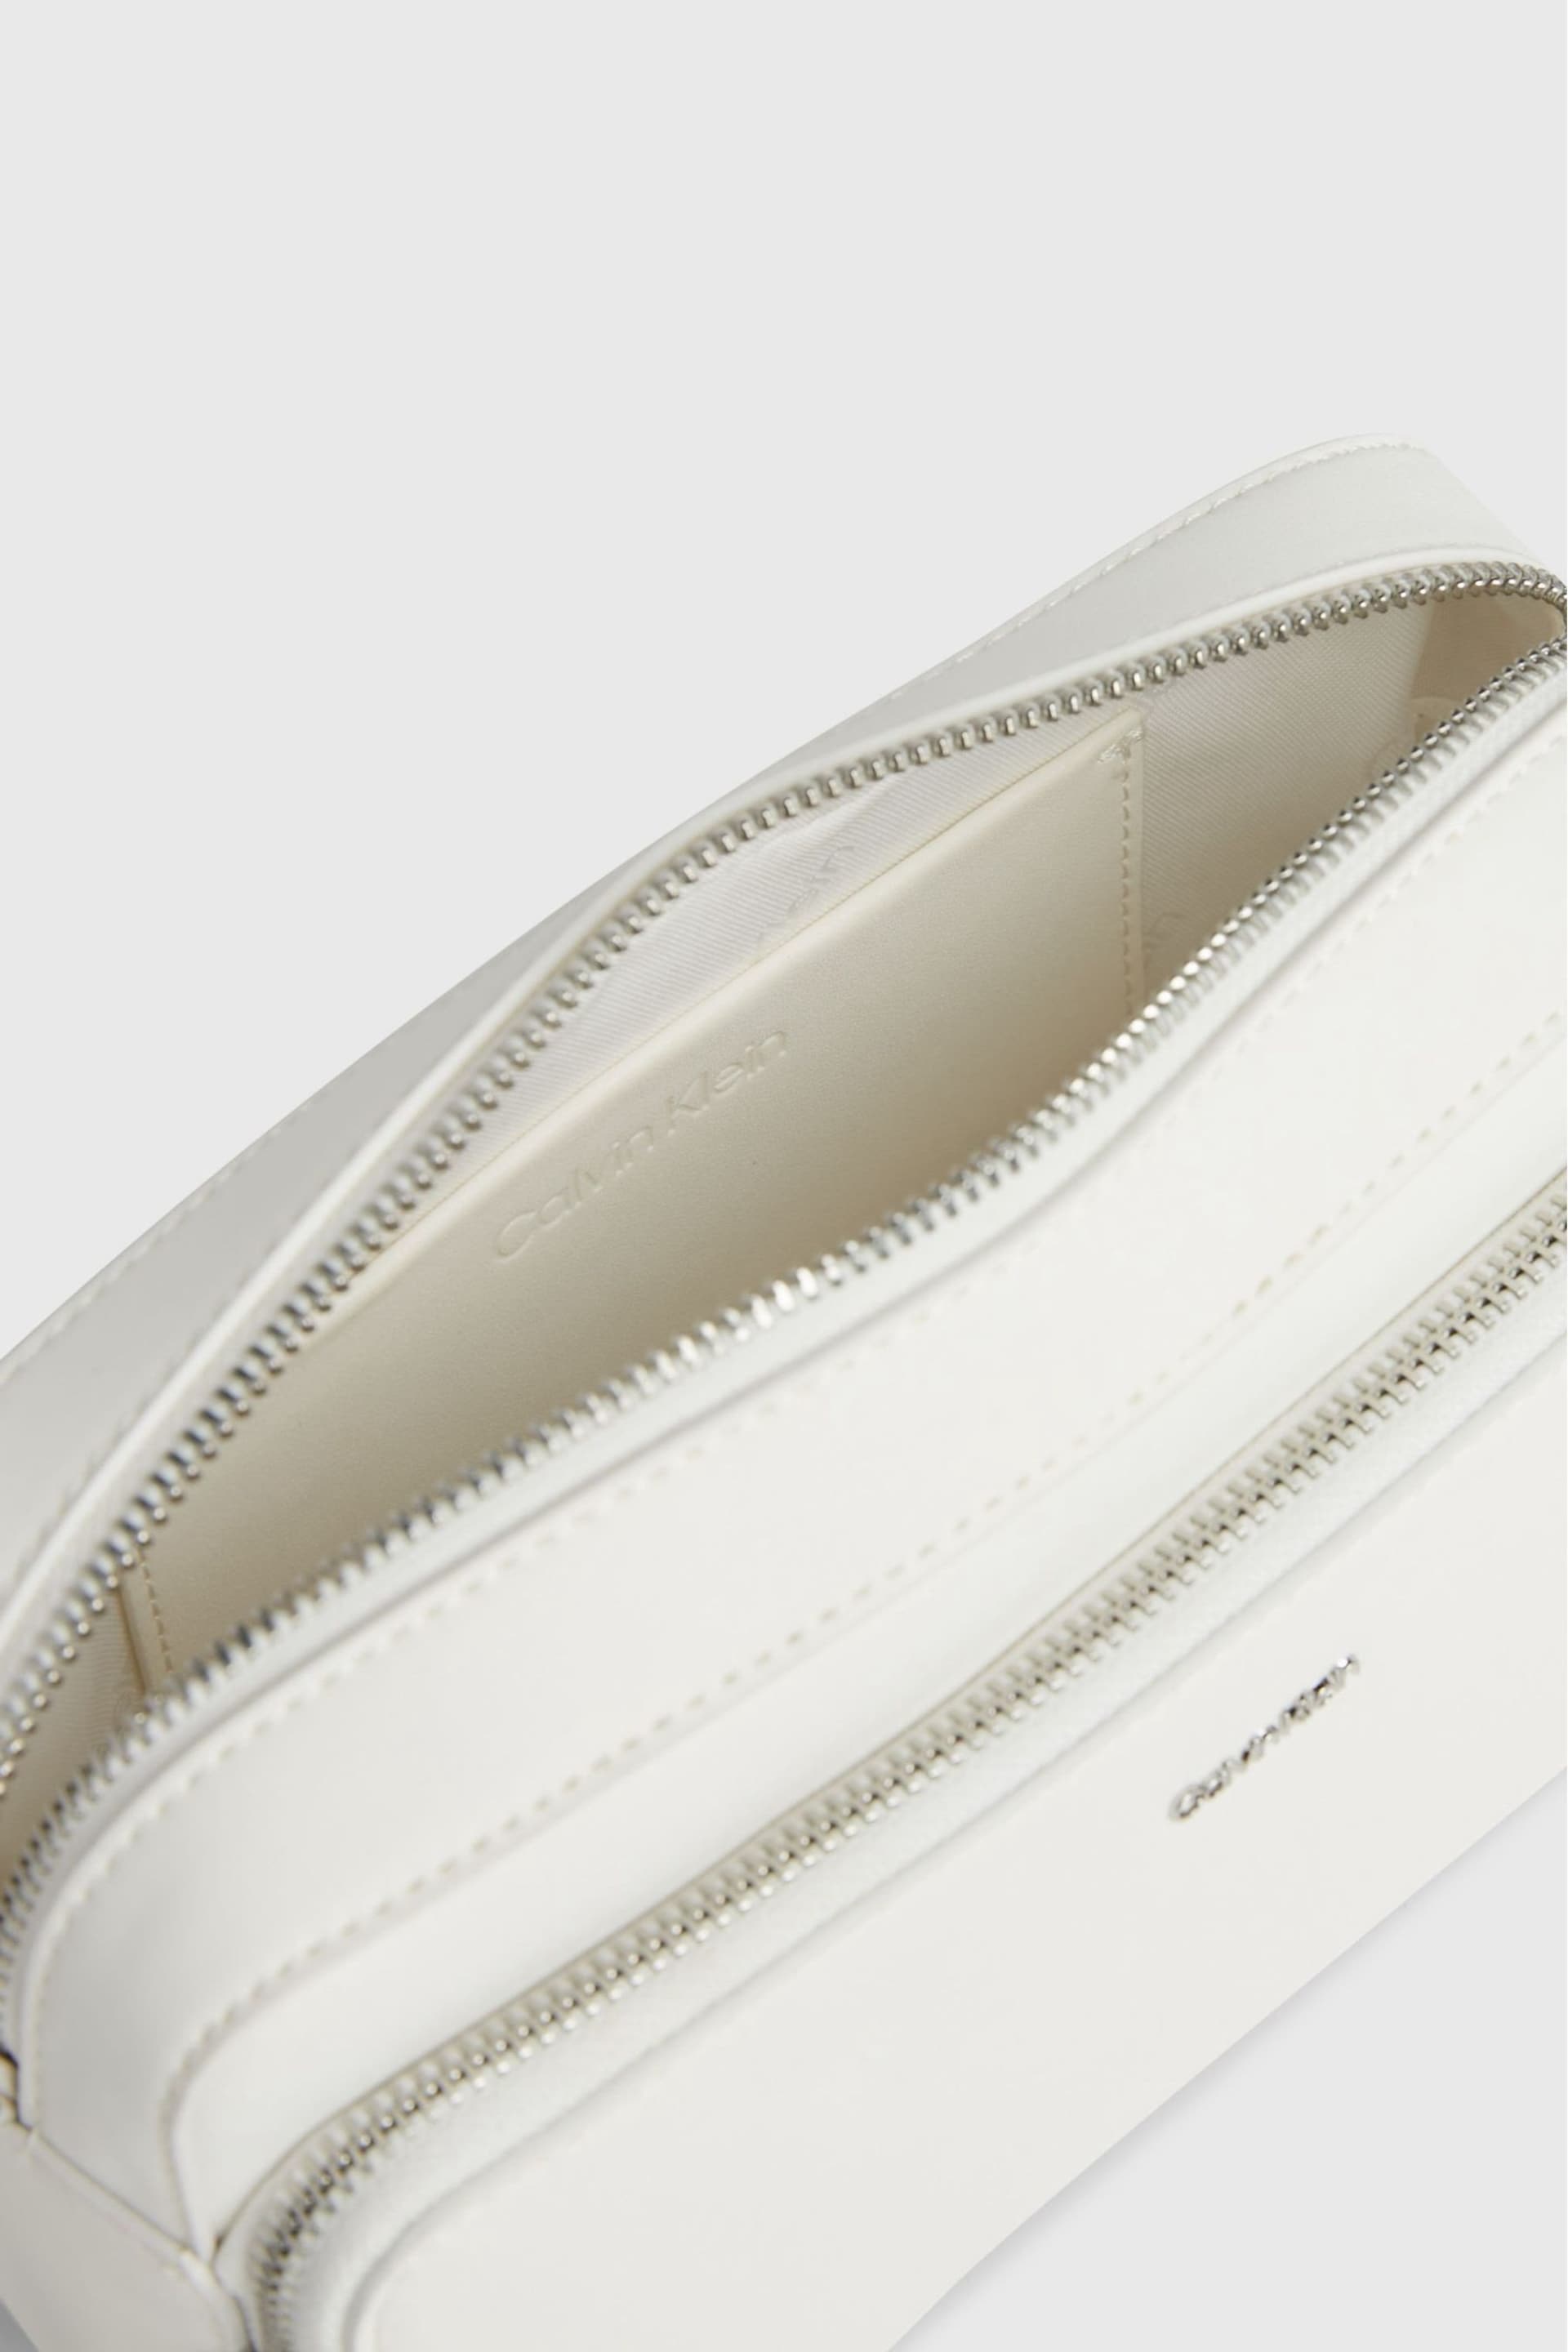 Calvin Klein White Camera Bag - Image 4 of 4